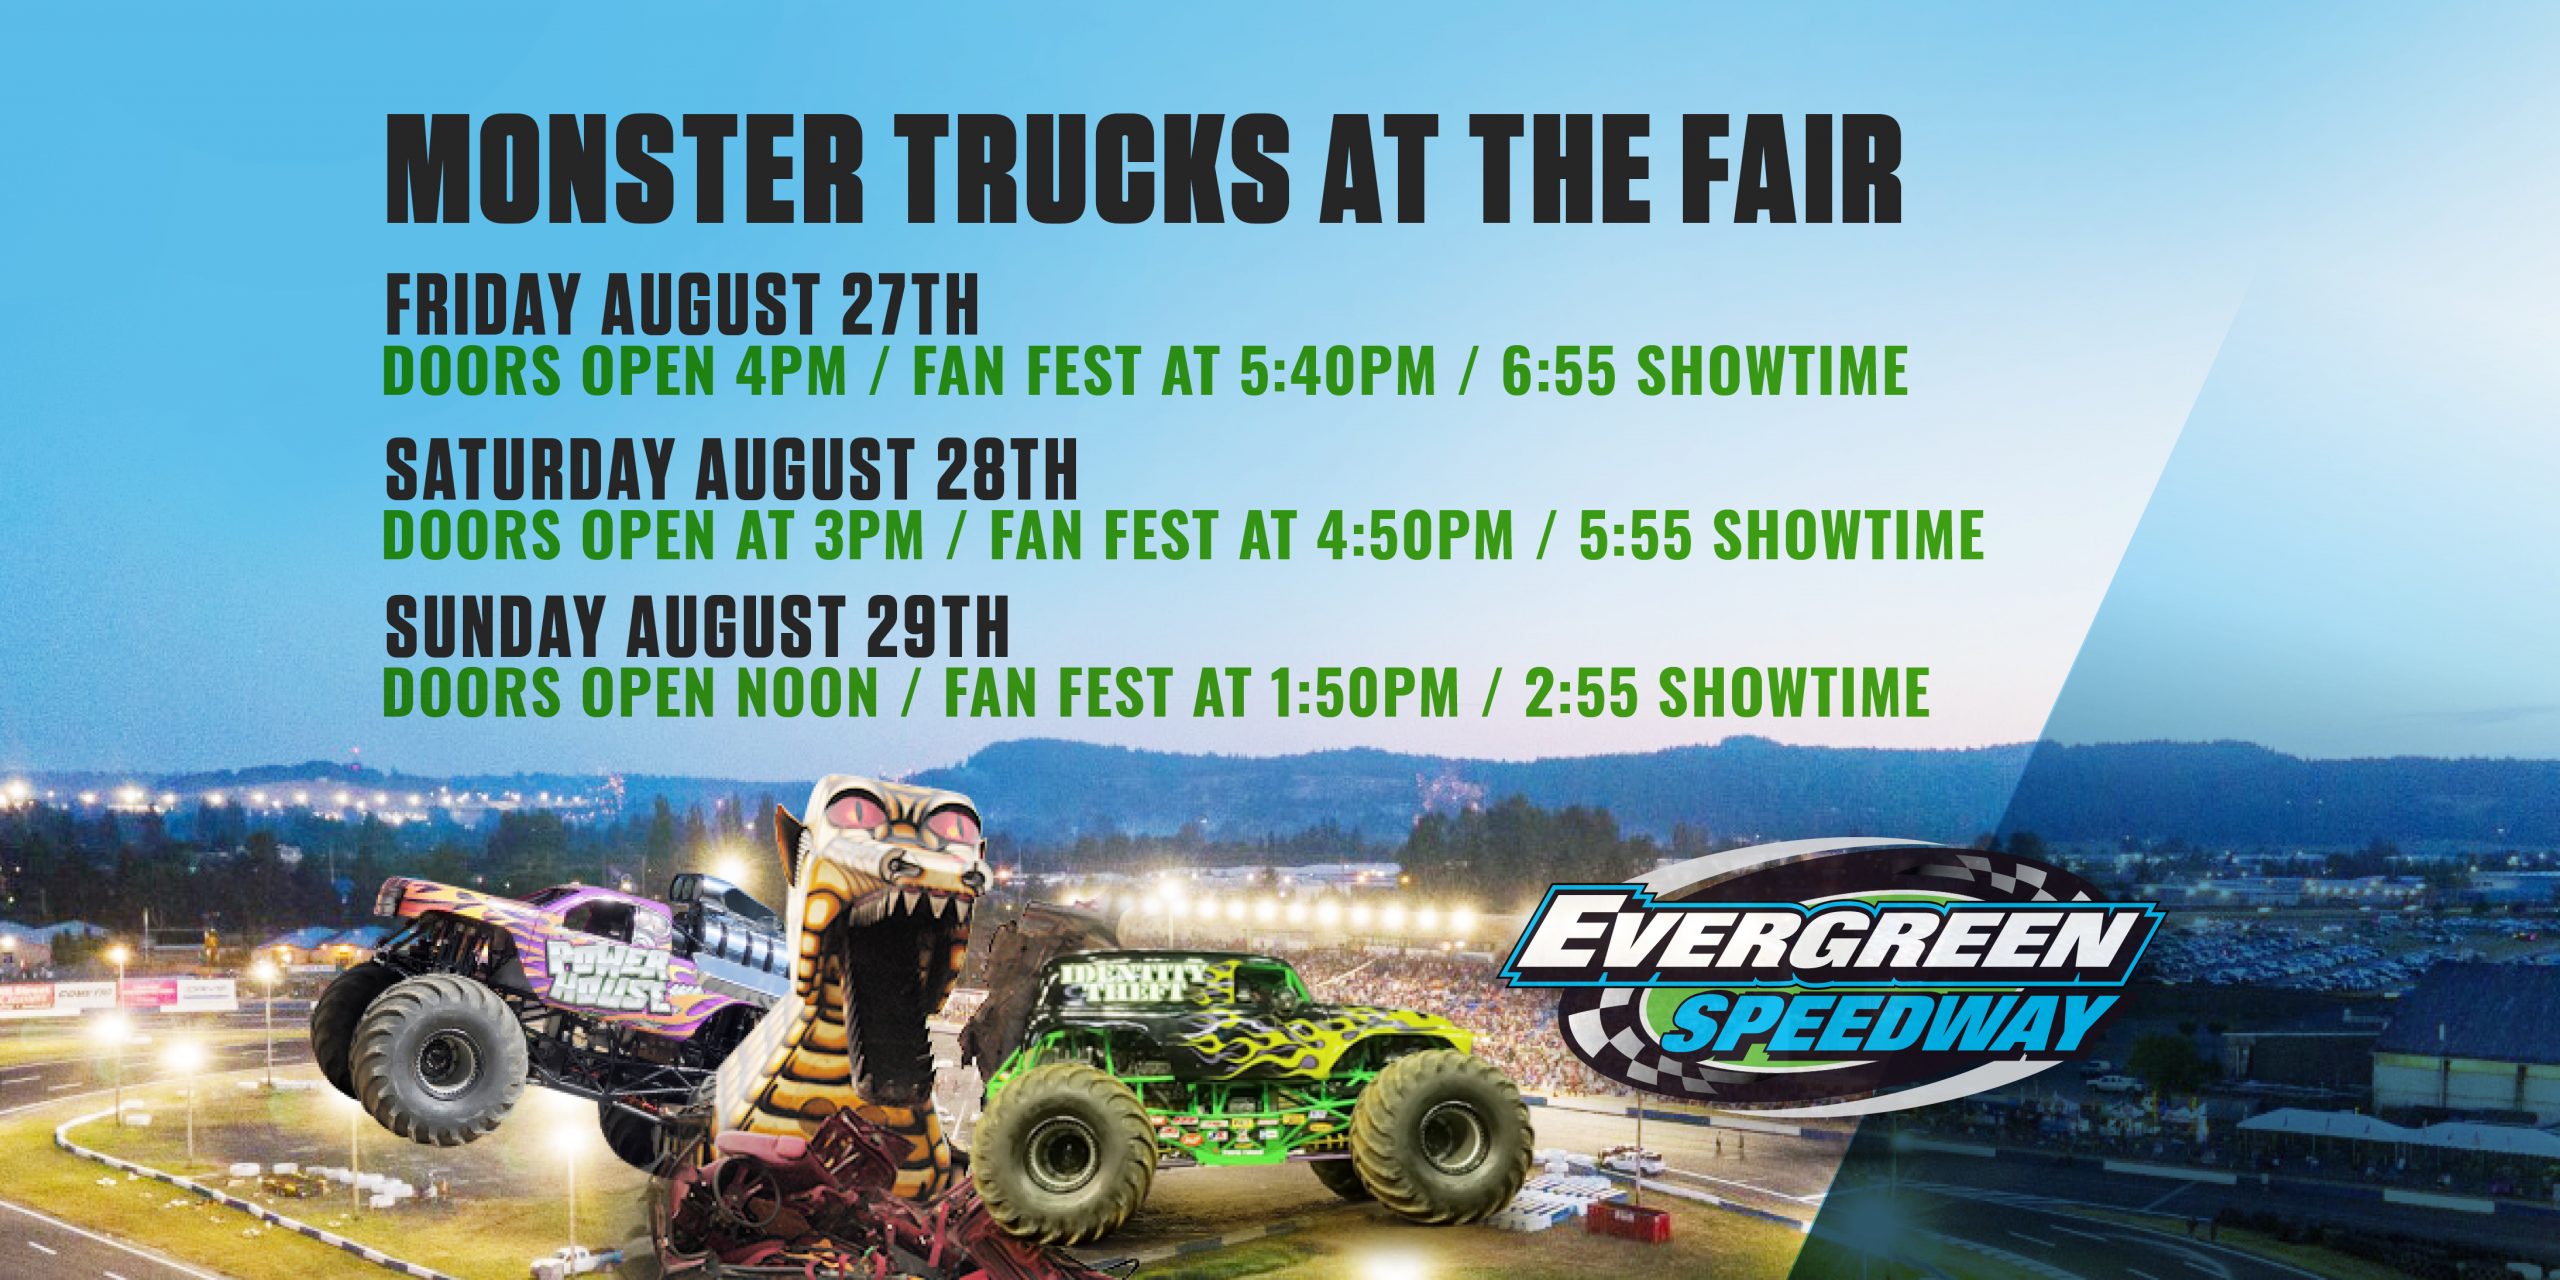 August 29th Sunday Monster Trucks At The Fair Evergreen Speedway